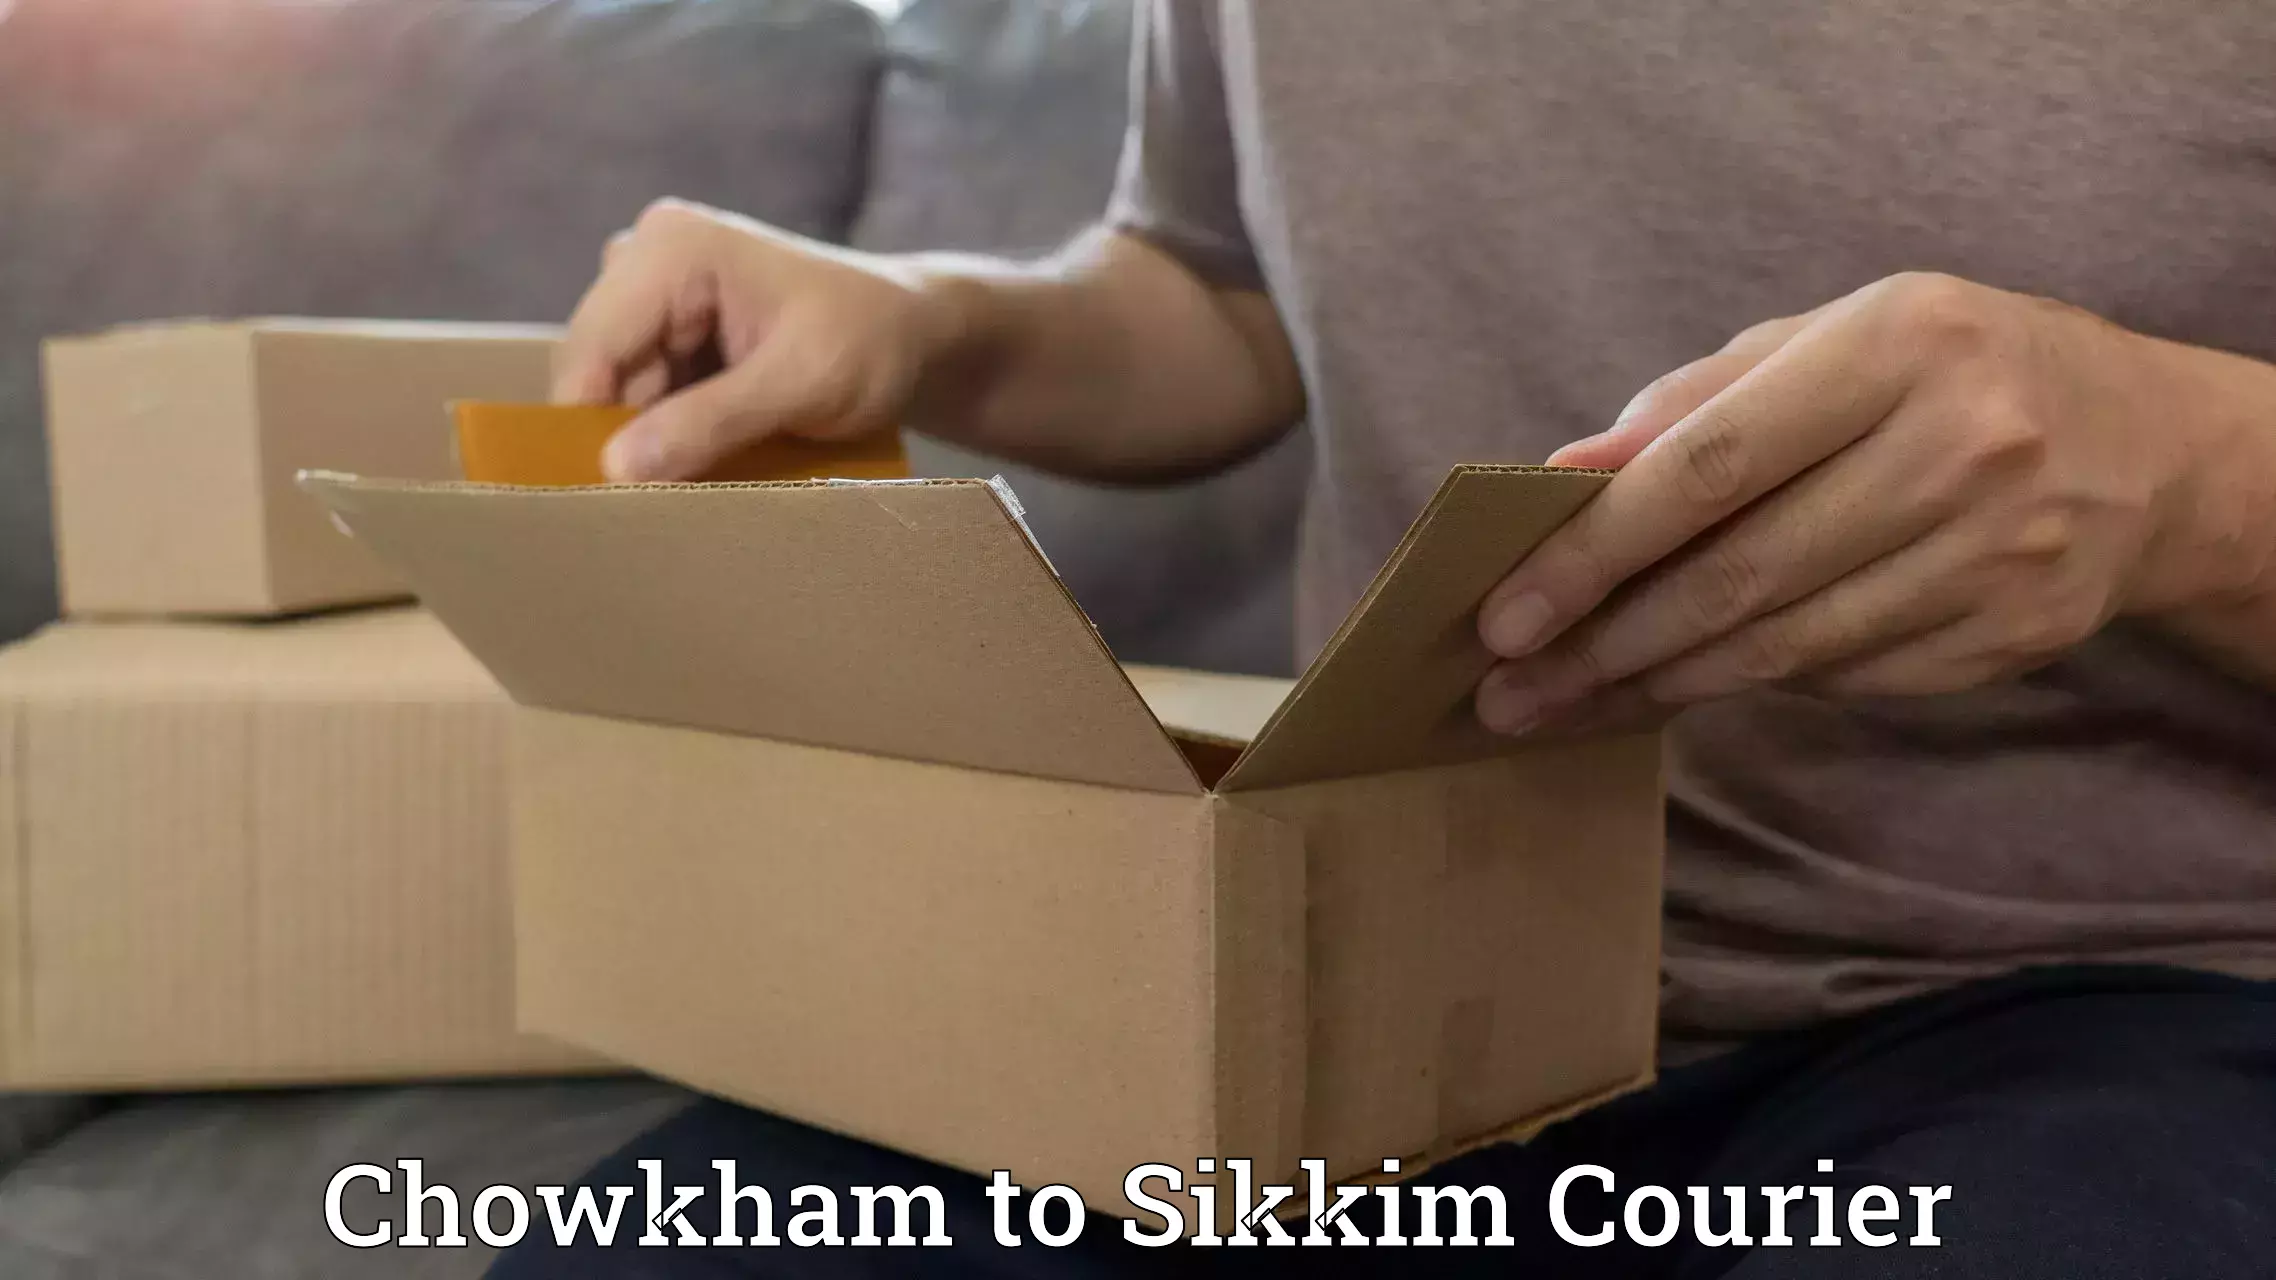 Courier service comparison Chowkham to West Sikkim